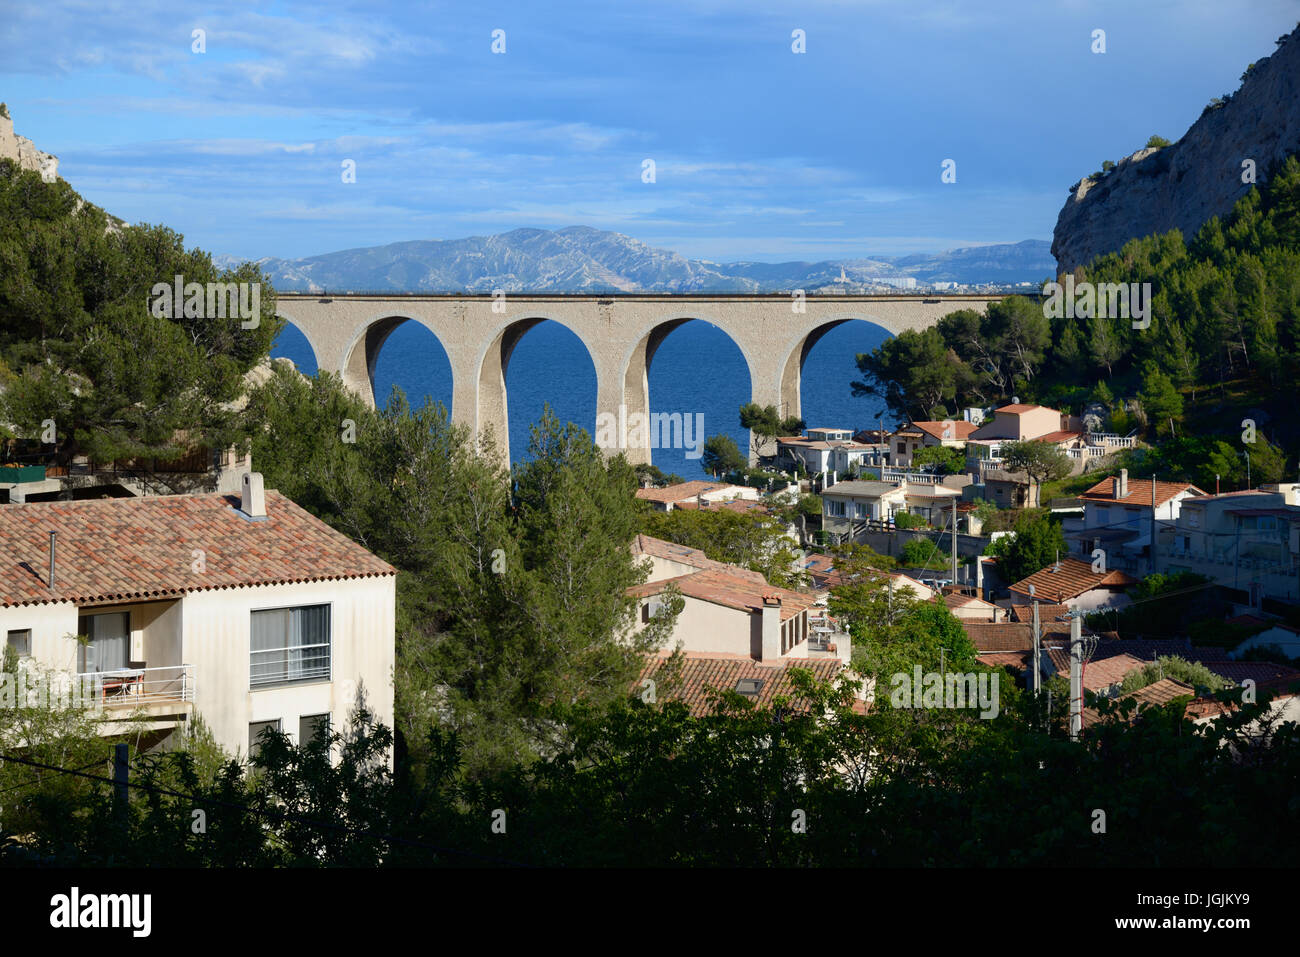 Railway Viaduct & the Village of La Vesse Calanque on the Mediterranean La Côte Bleue or Blue Coast west of Marseille France Stock Photo